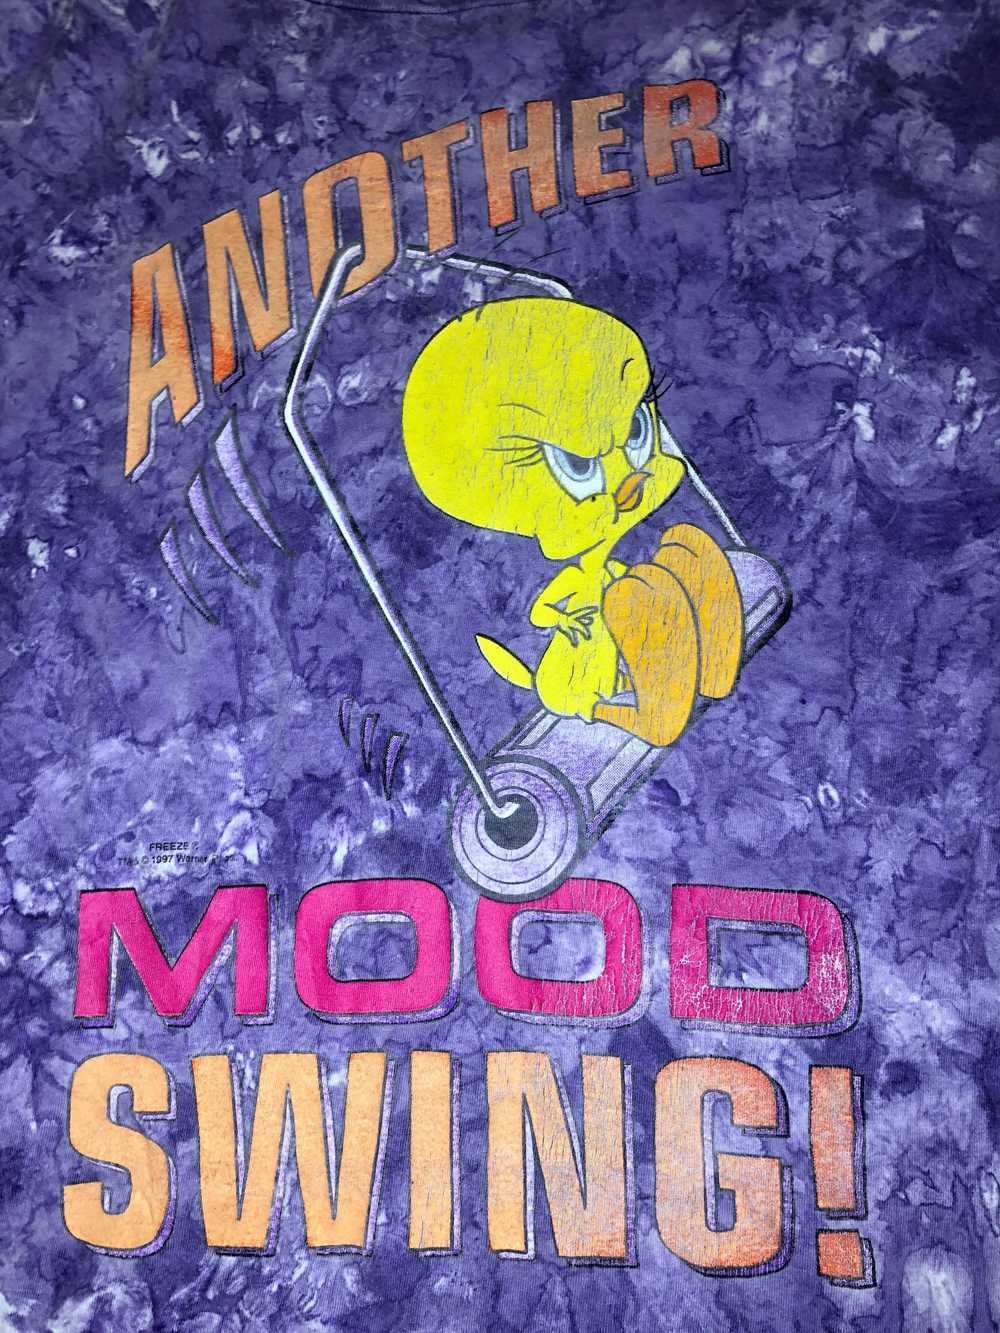 1997 Looney Tunes Tweety “ Another Mood Swing” Tee - image 2